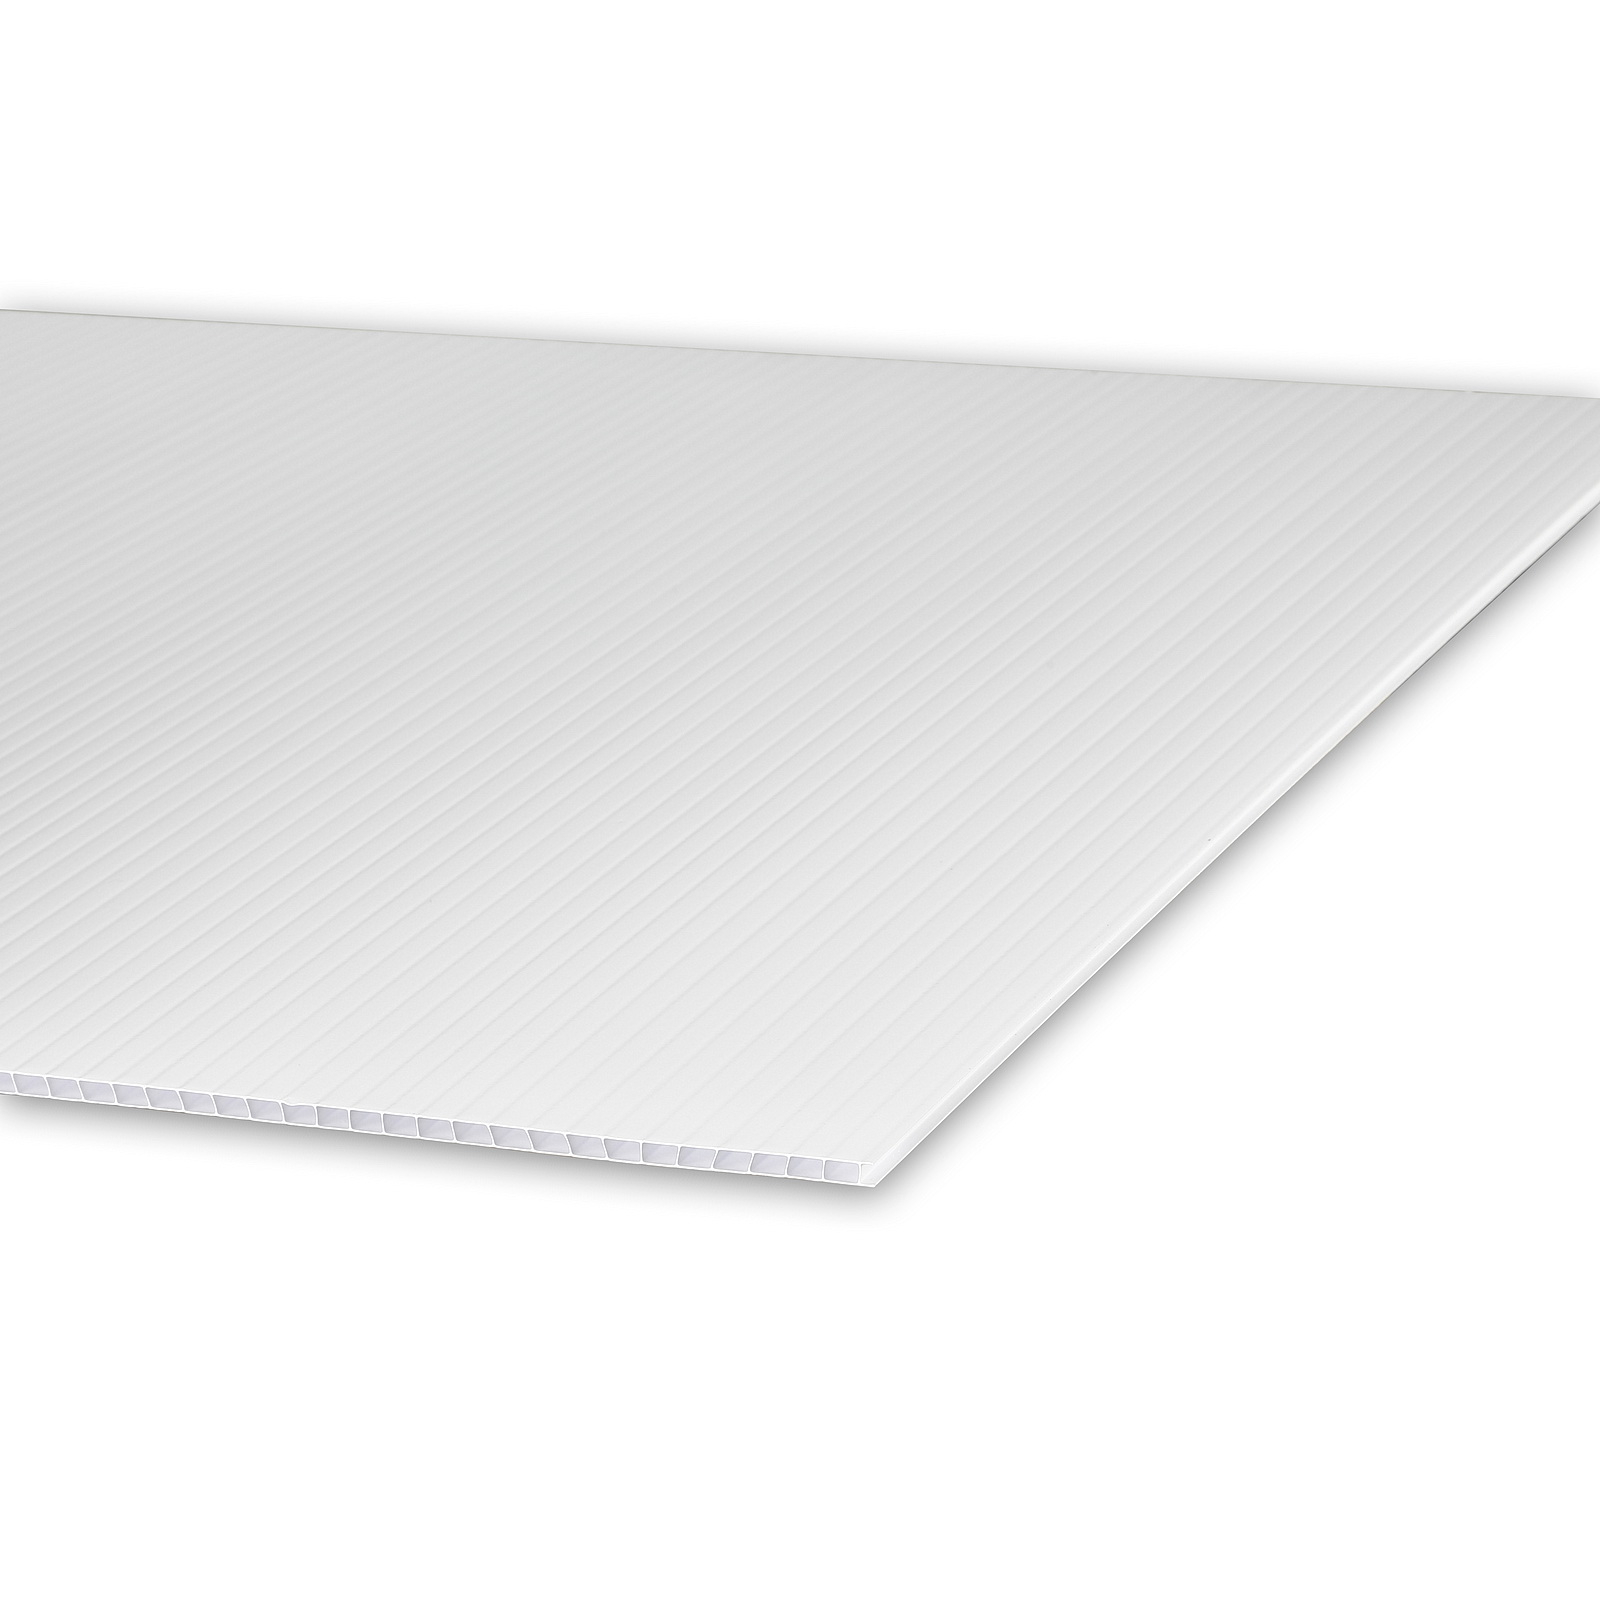 (1) 18''W x 24''H x 4mm White Corrugated Plastic Board and (1) Super Heavy Duty Stakes 10'' x 28'' (SKU: CB18-24W x PCHDSS10285)